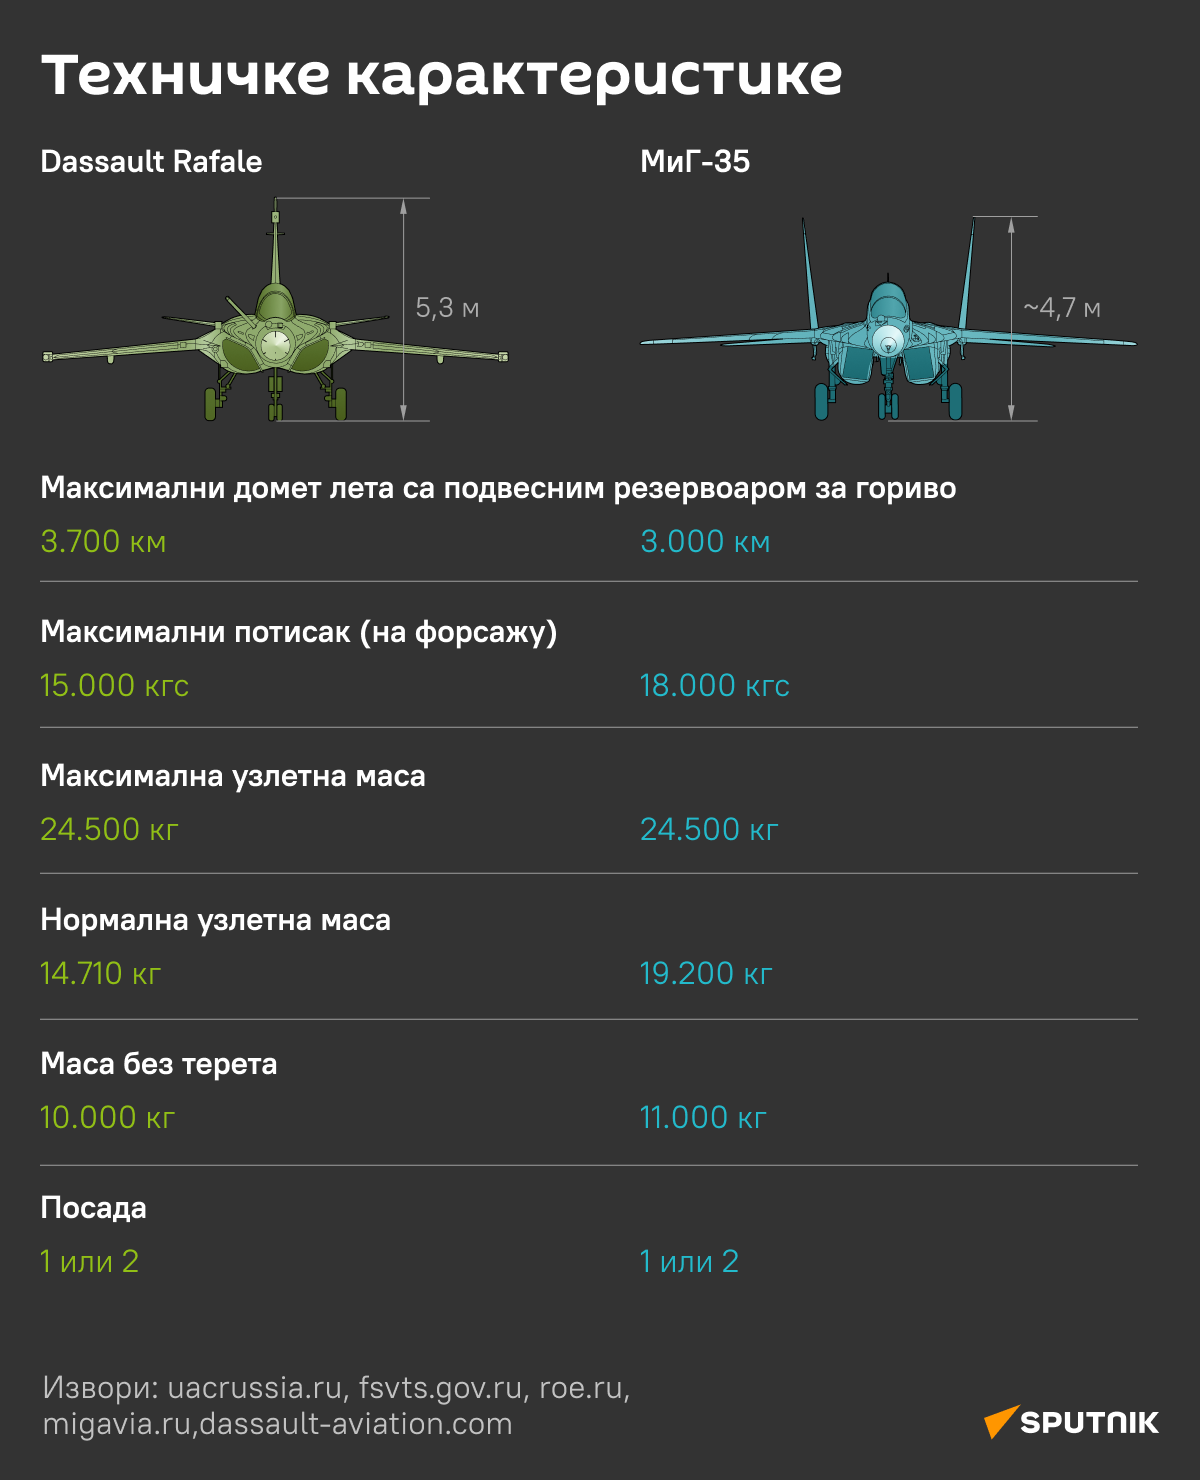 Rafal vs MiG 2 - Sputnik Srbija